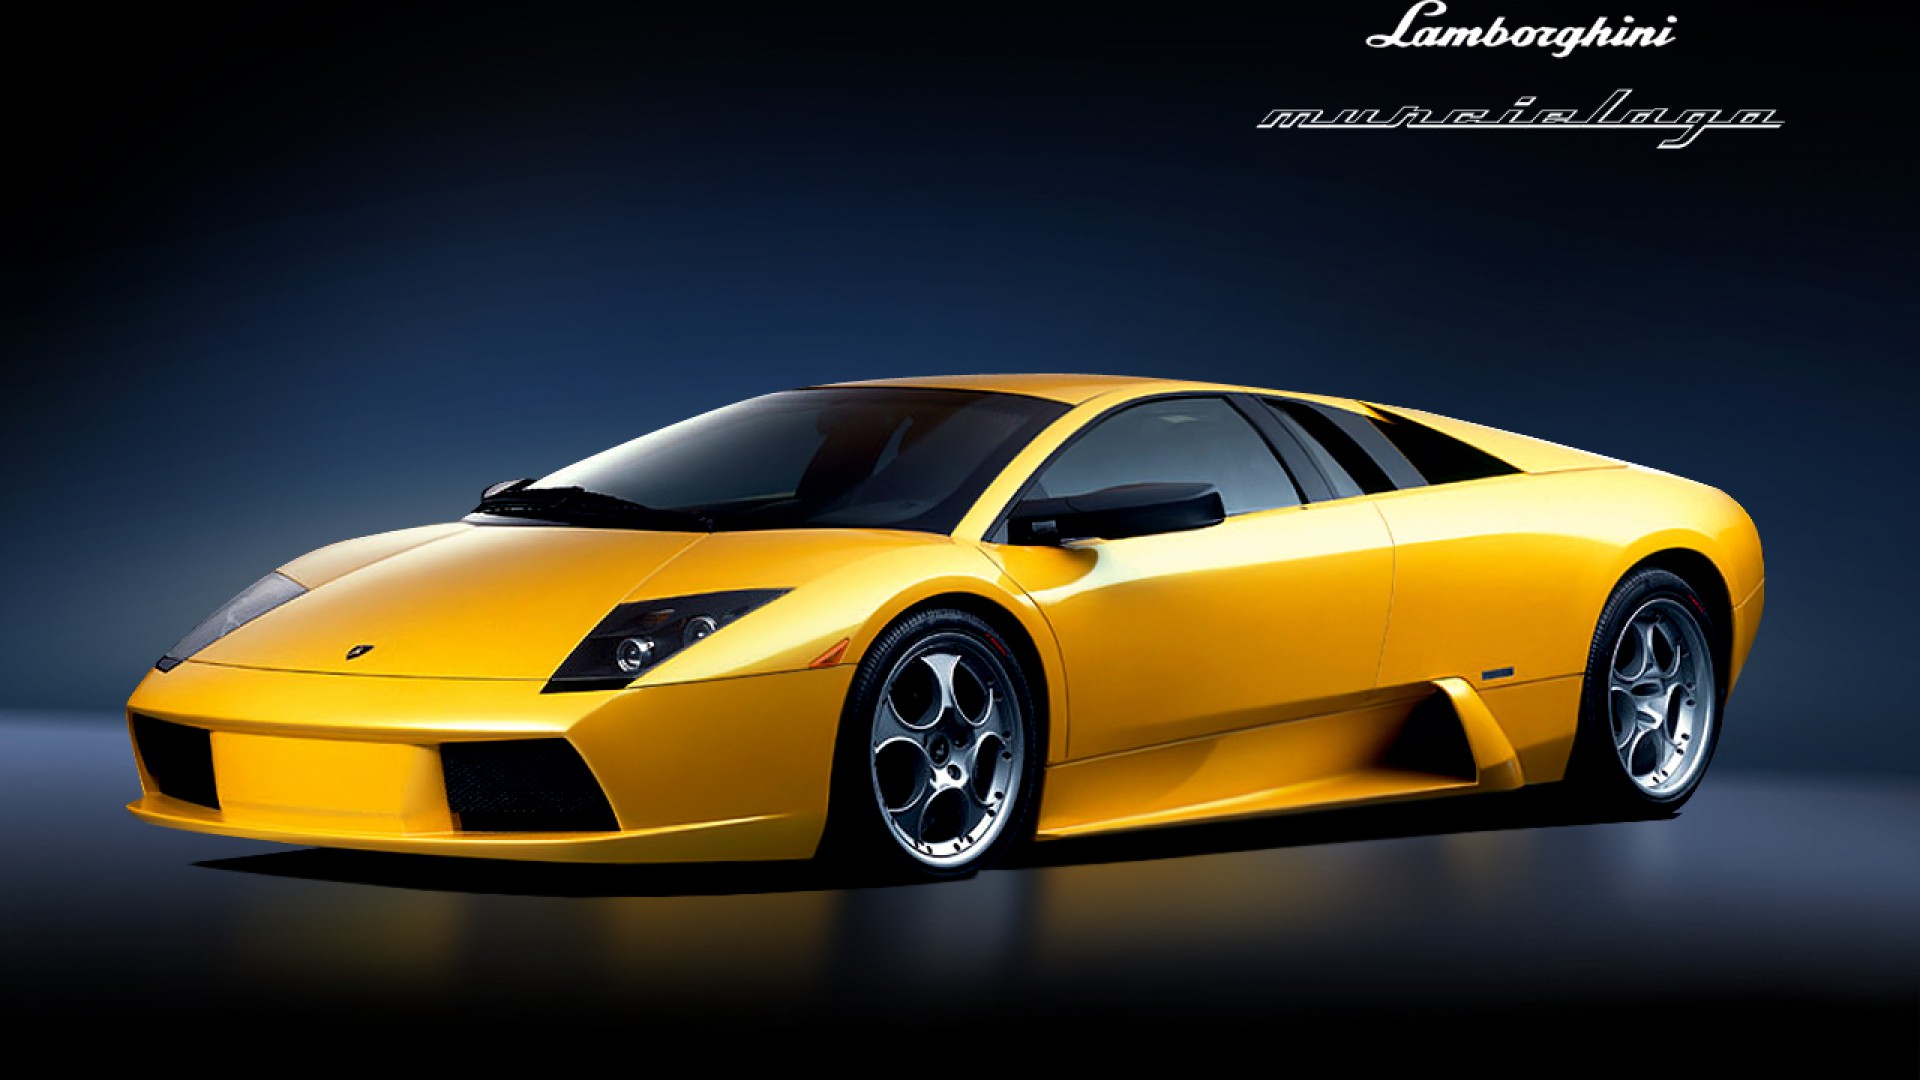 Nice Images Collection: Lamborghini Murciélago Desktop Wallpapers